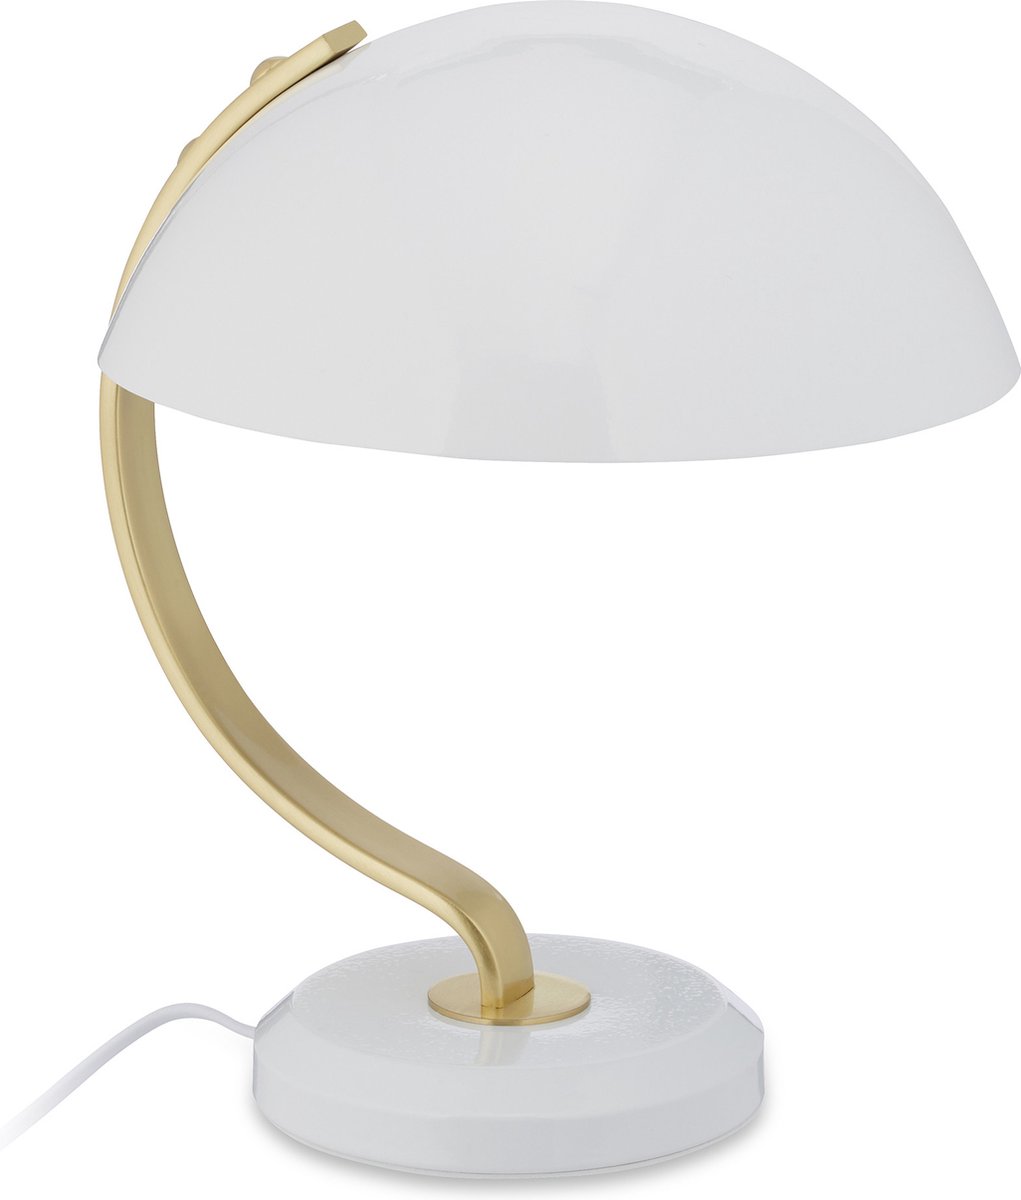 relaxdays lampe de table tactile - veilleuse - lampe de table - dimmable -  lampe